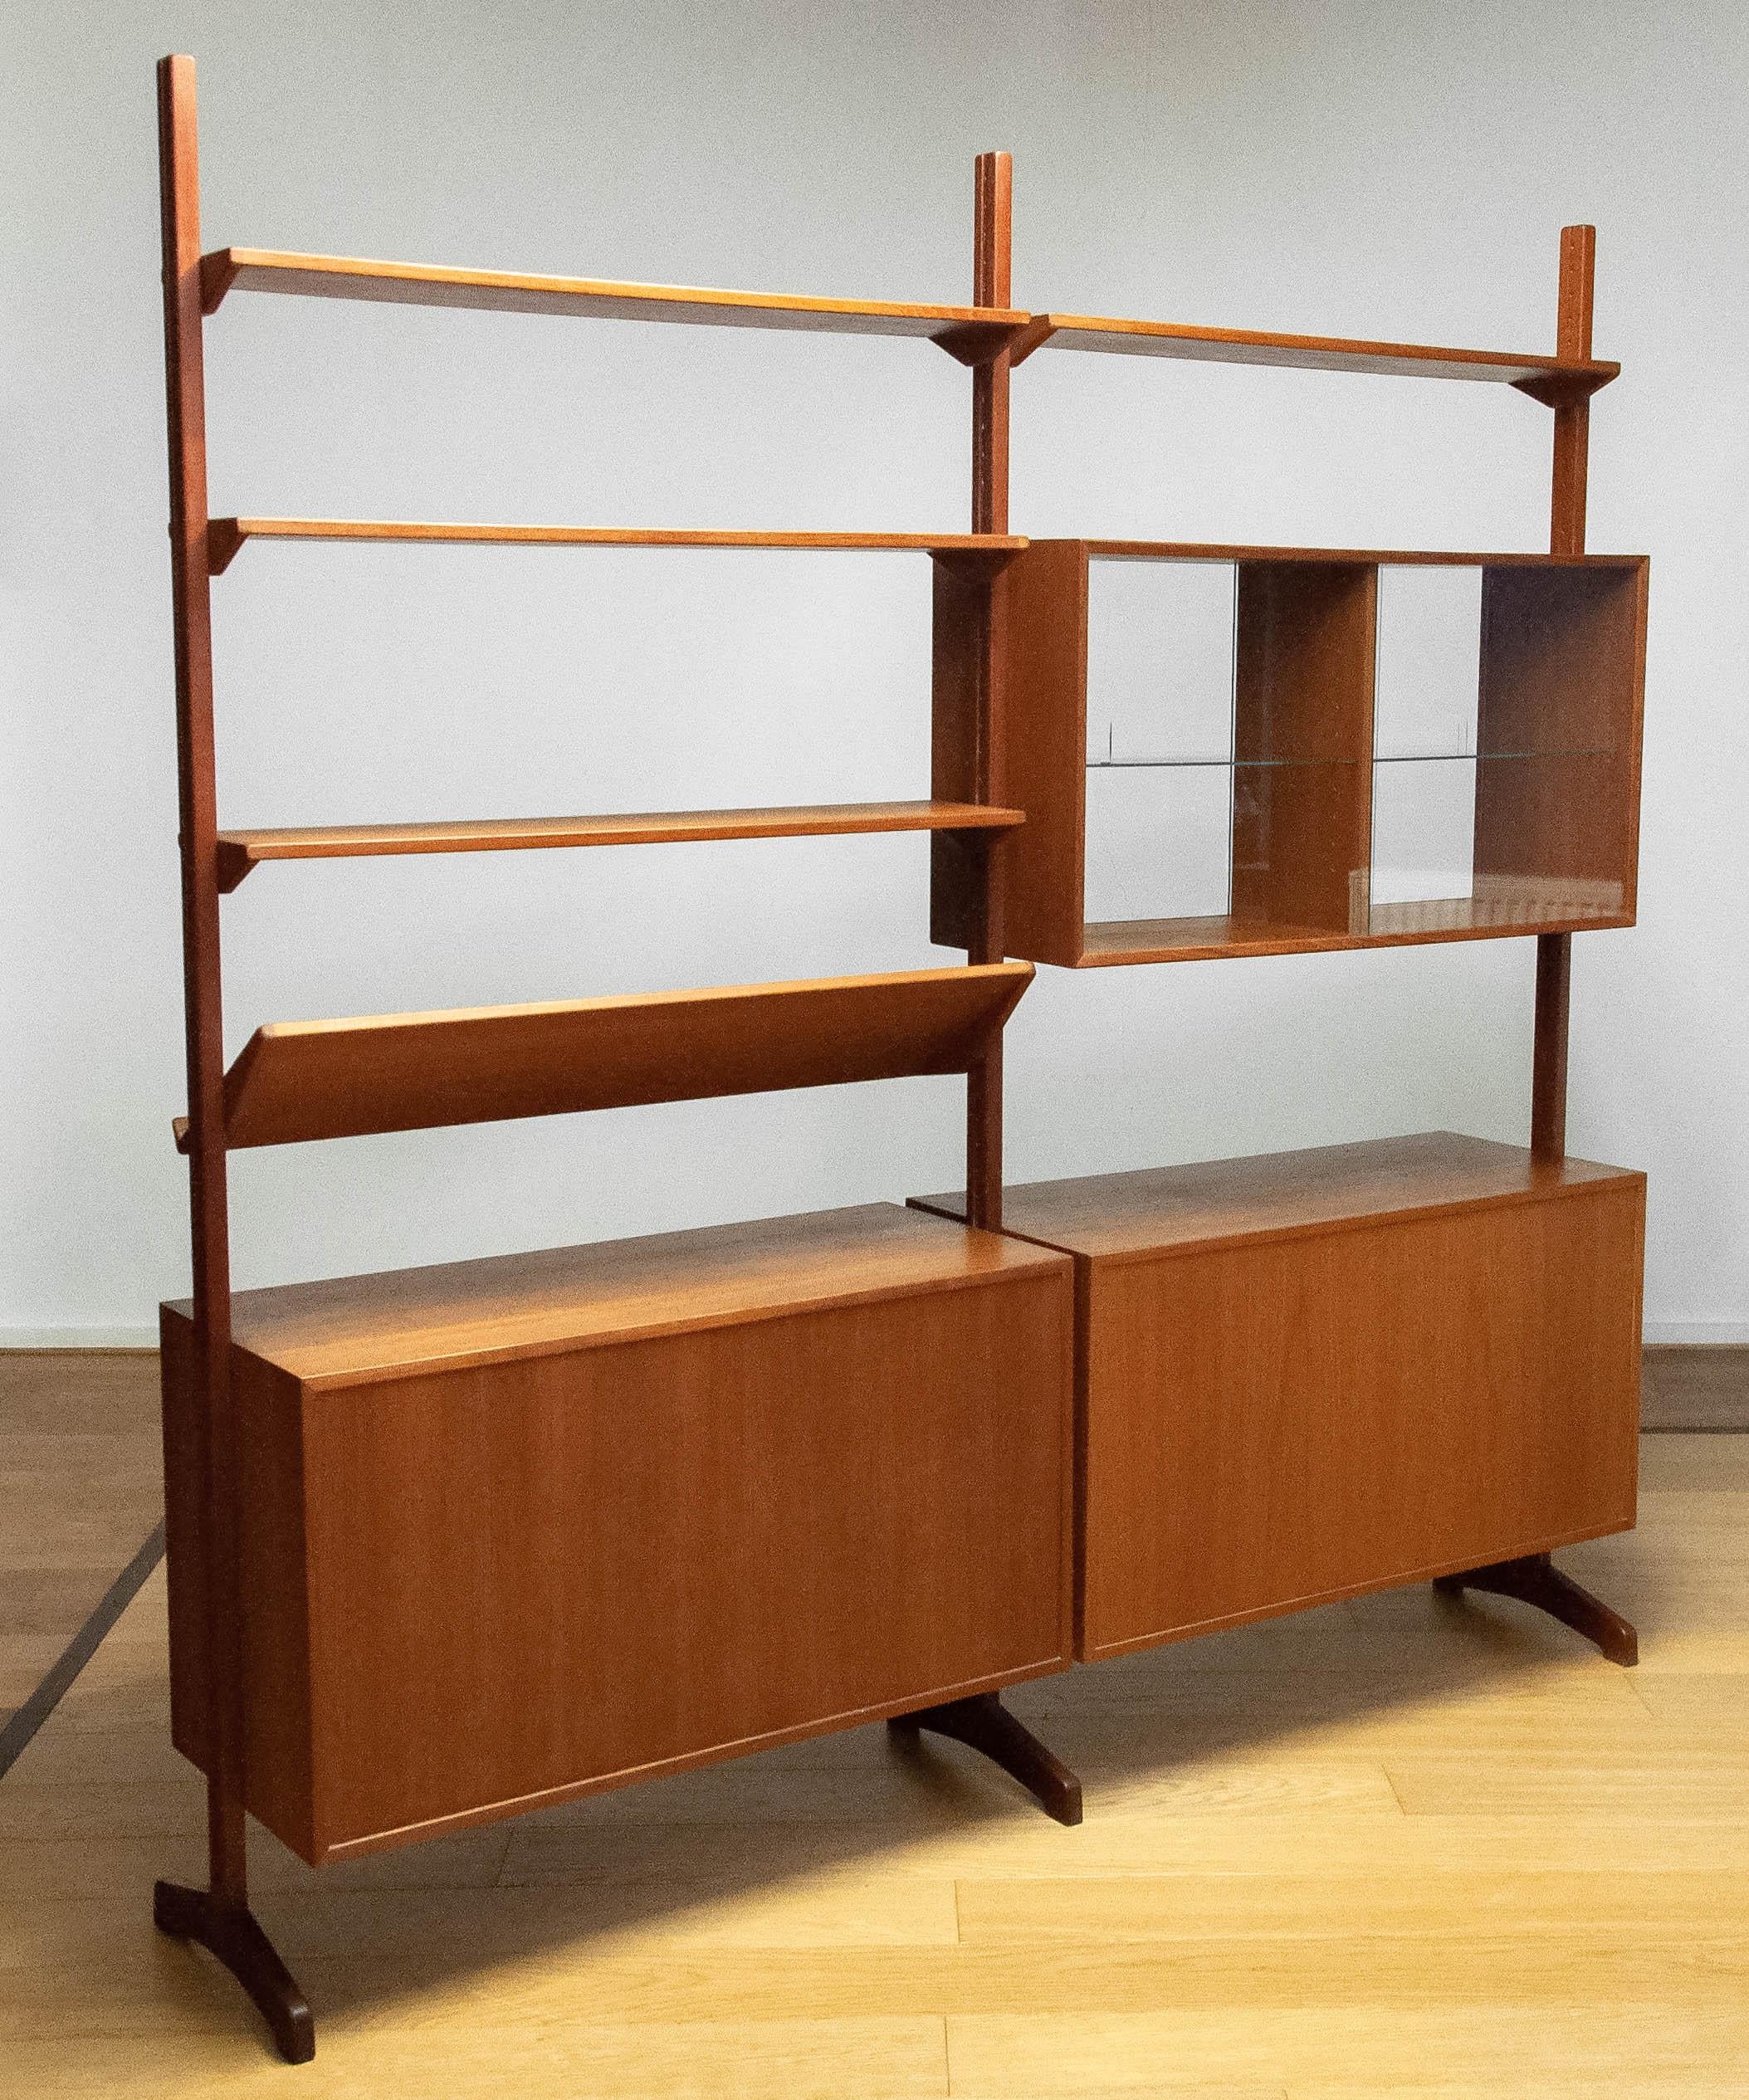 1950s Teak Bookcase Shelf Cabinet / Room divider By Nils Jonsson For Troeds. In Good Condition For Sale In Silvolde, Gelderland